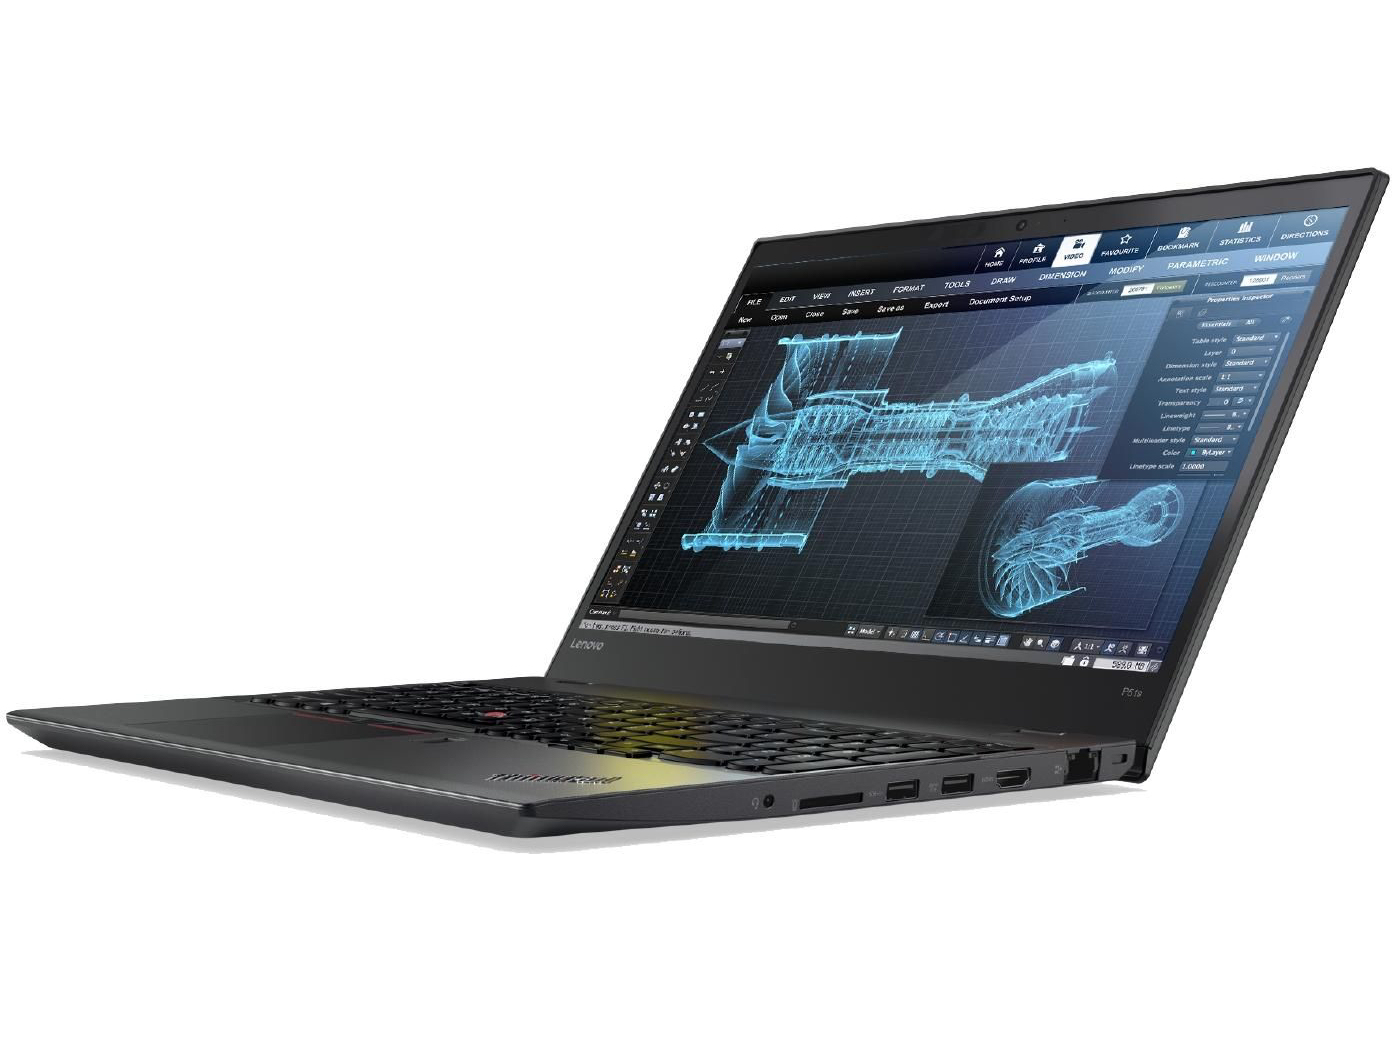 Lenovo ThinkPad P51s (Core i7, 4K) Workstation Review - NotebookCheck.net  Reviews